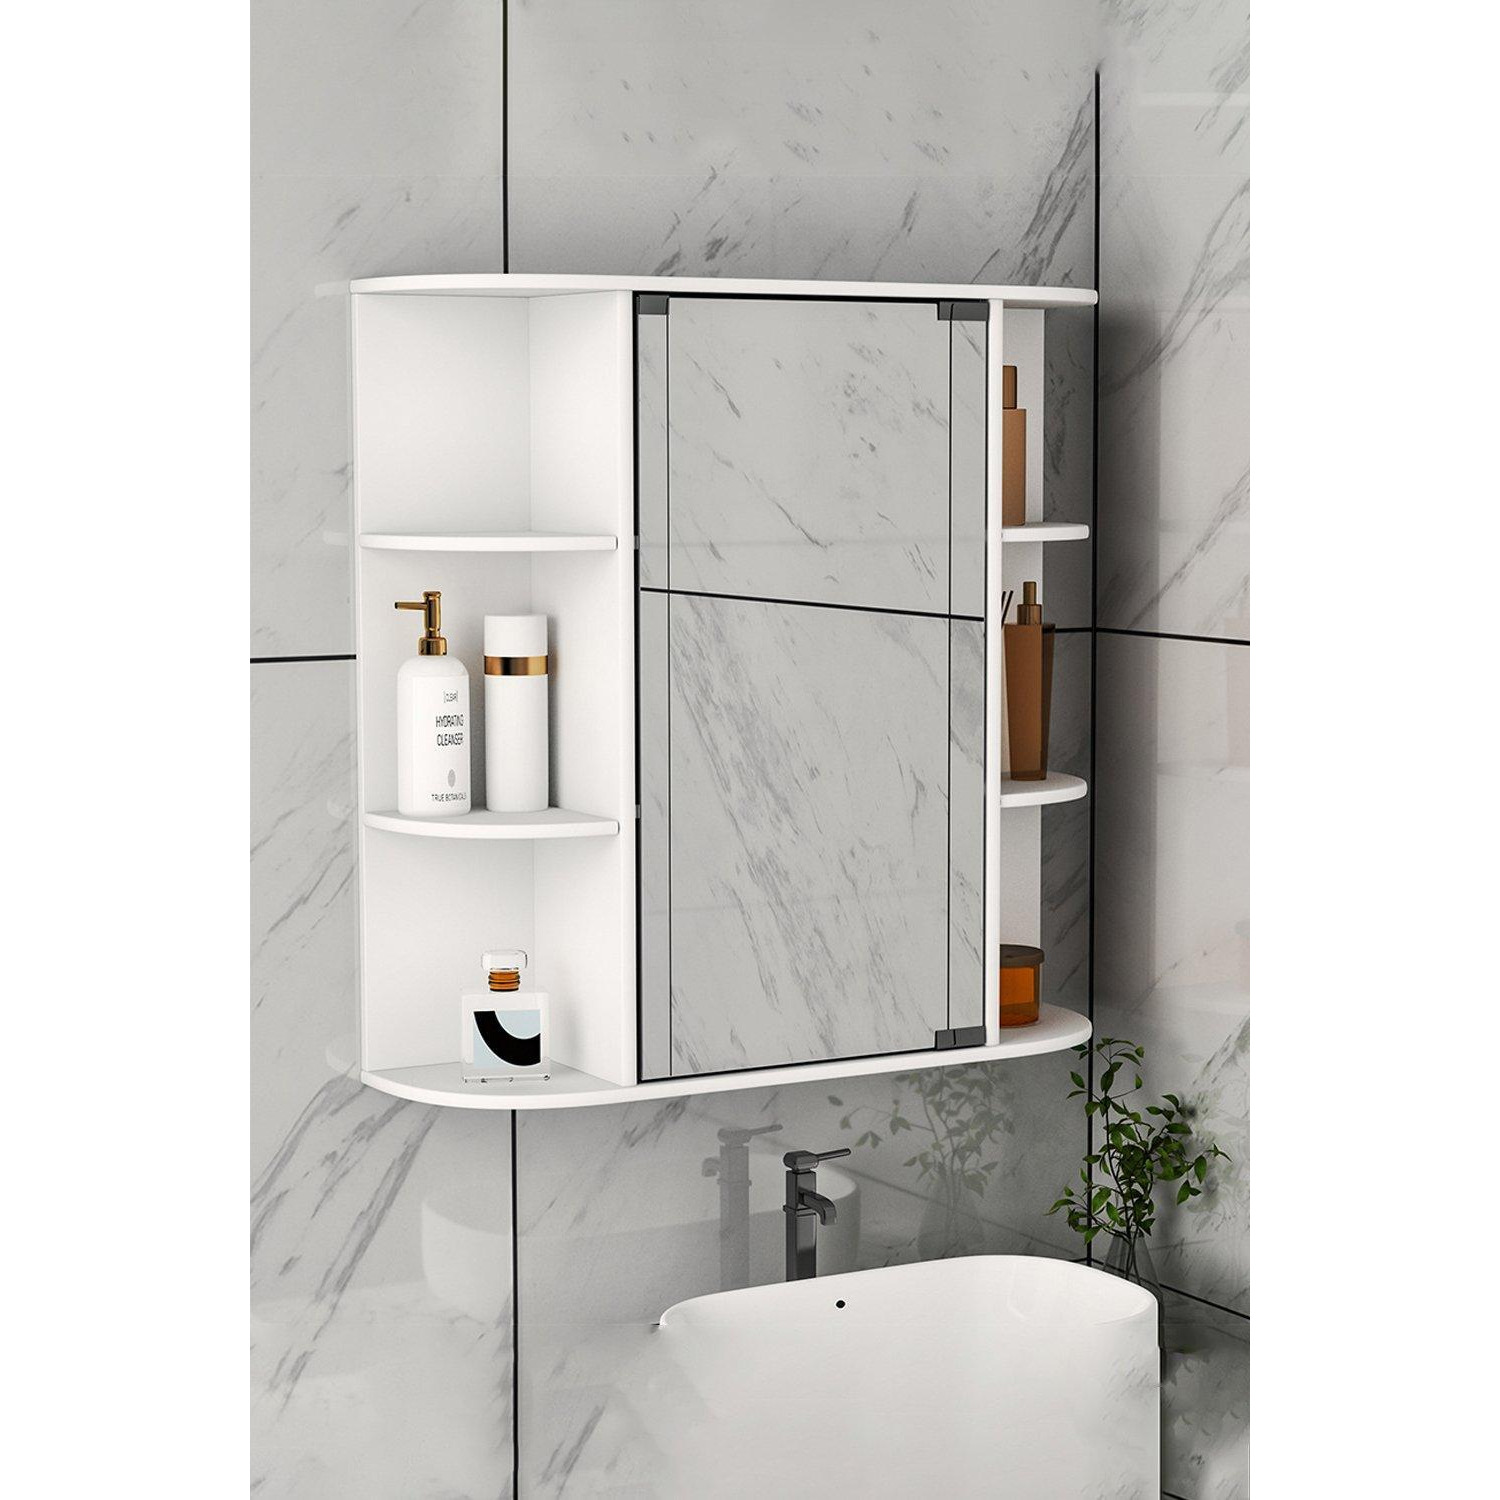 Wall Mount Bathroom Mirror Cabinet Single Door Wall Mounted Storage Cupboard With 6 Shelves Display Organiser Unit - image 1